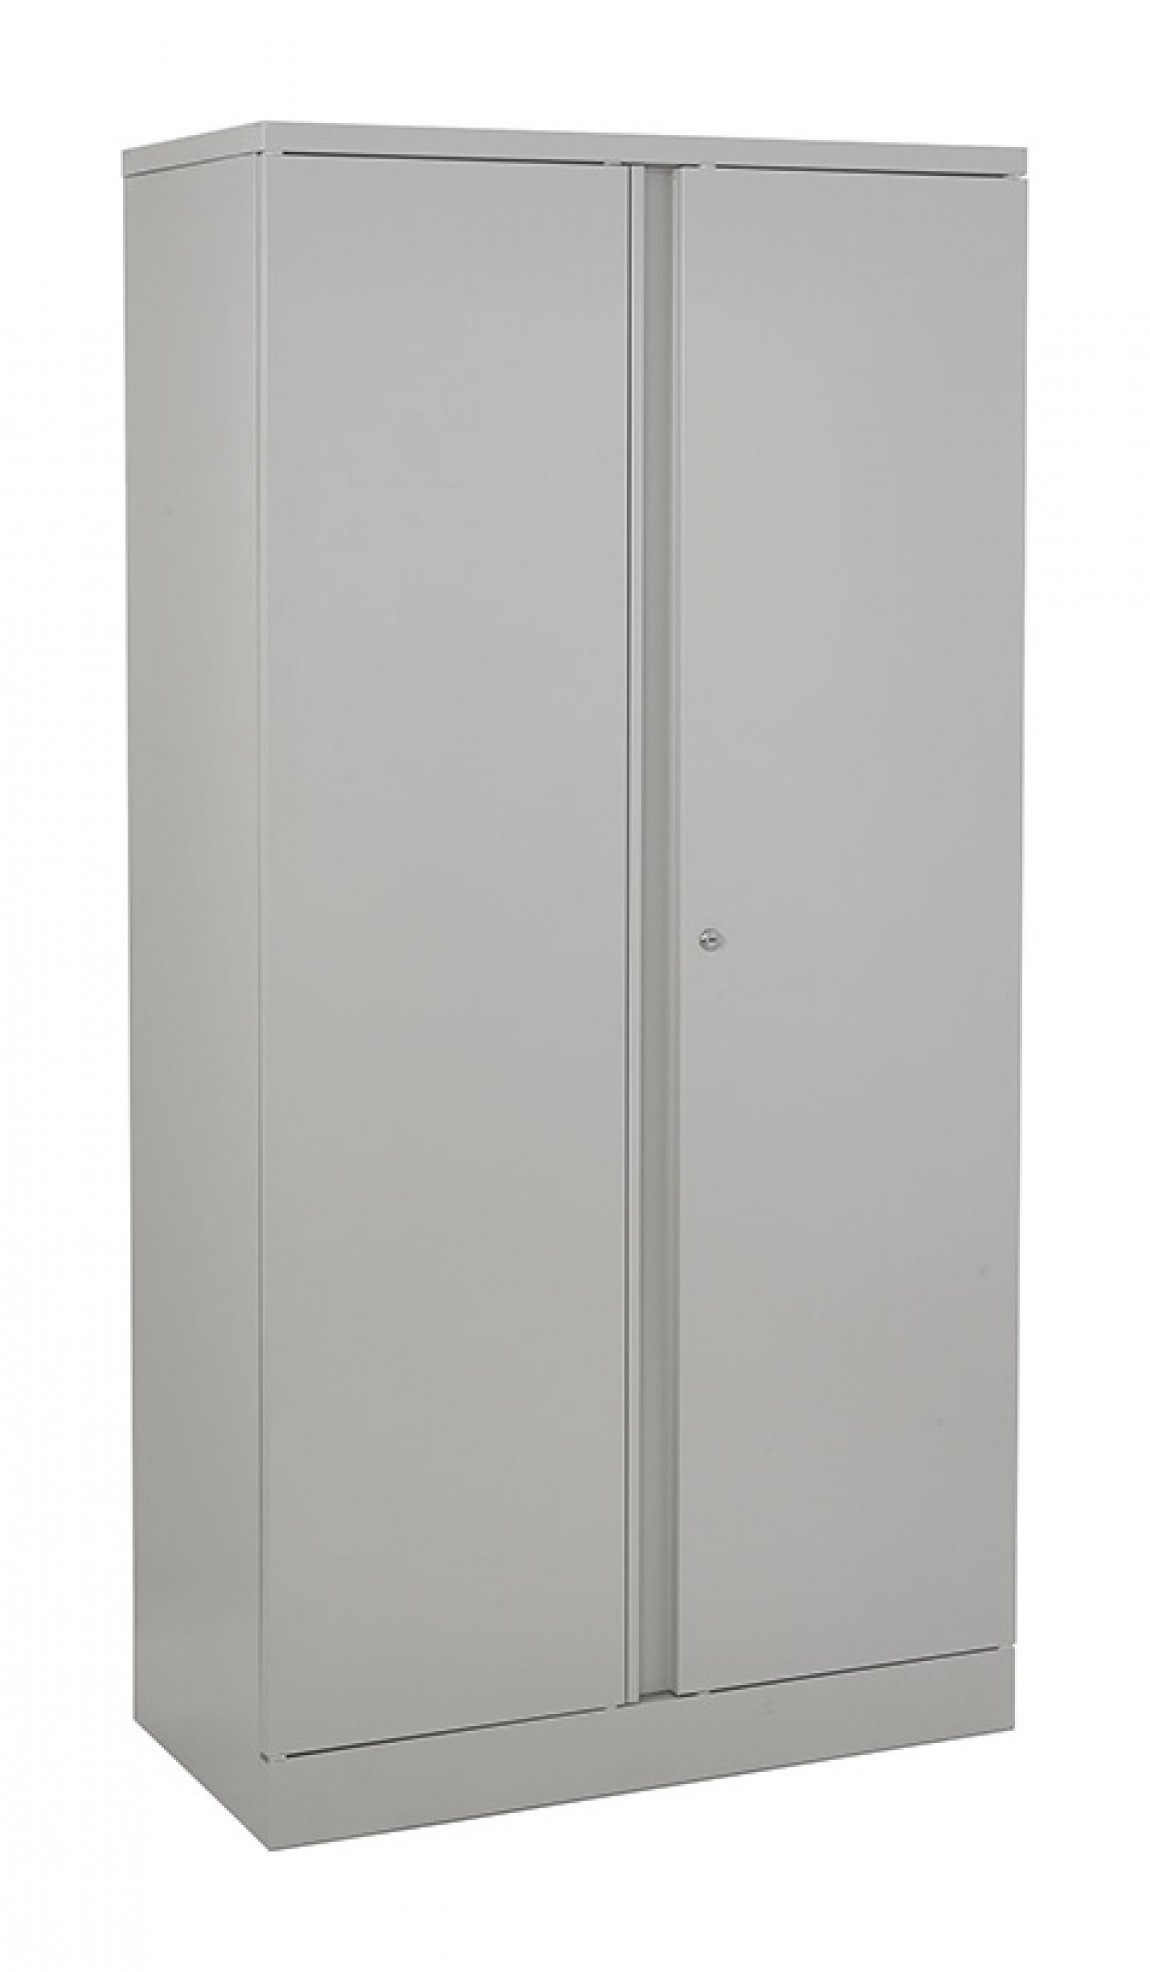 https://madisonliquidators.com/images/p/1150/24706-storage-cabinet-with-4-adjustable-shelves-1.jpg